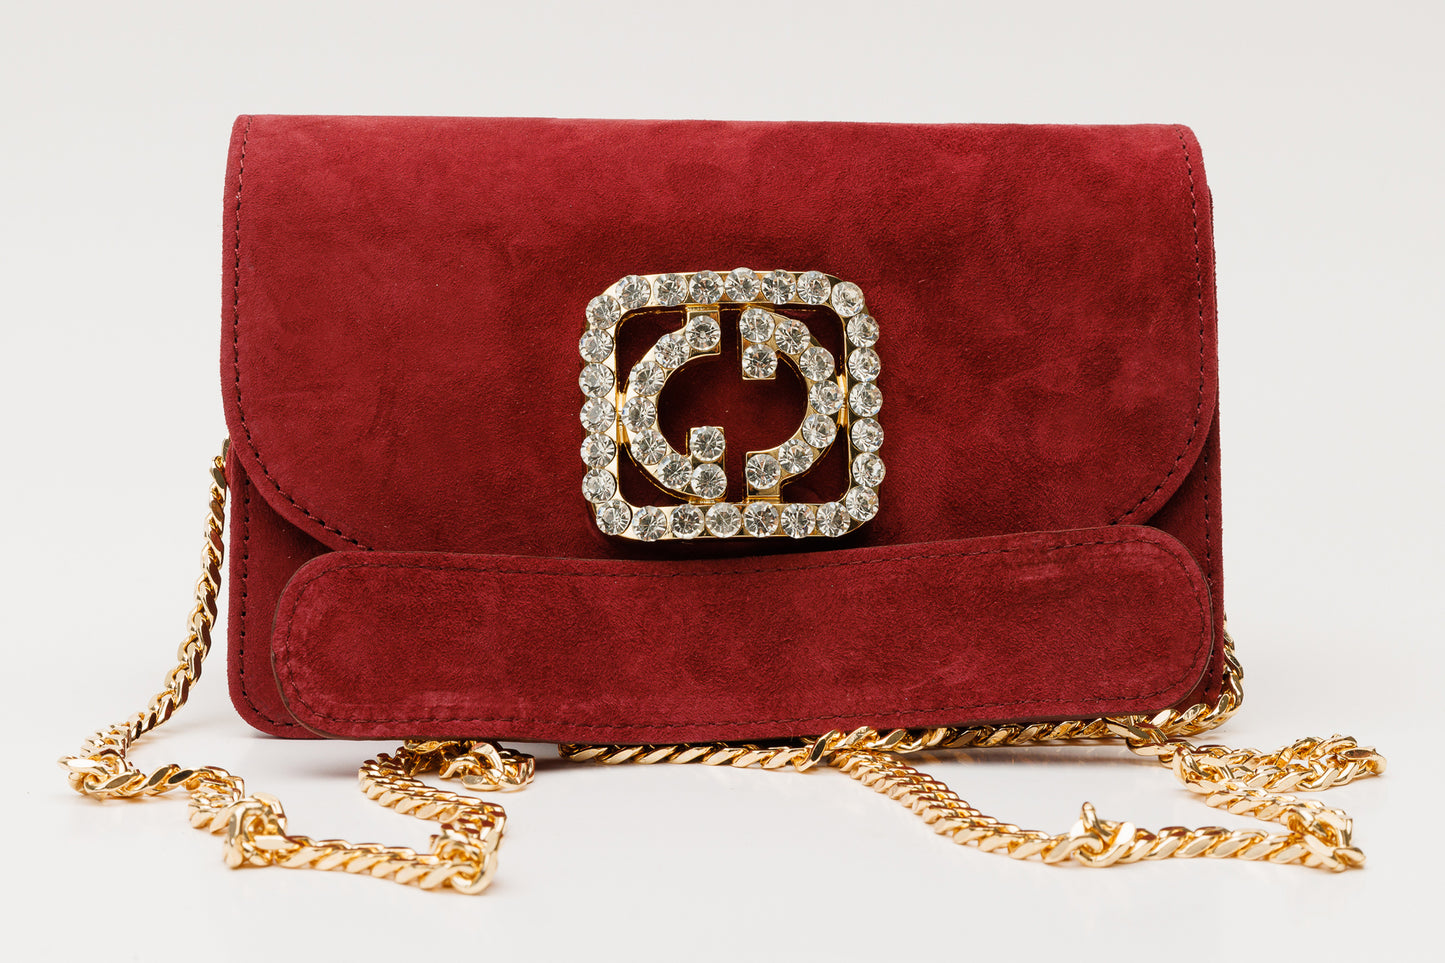 The California Burgundy Suede Leather Handbag